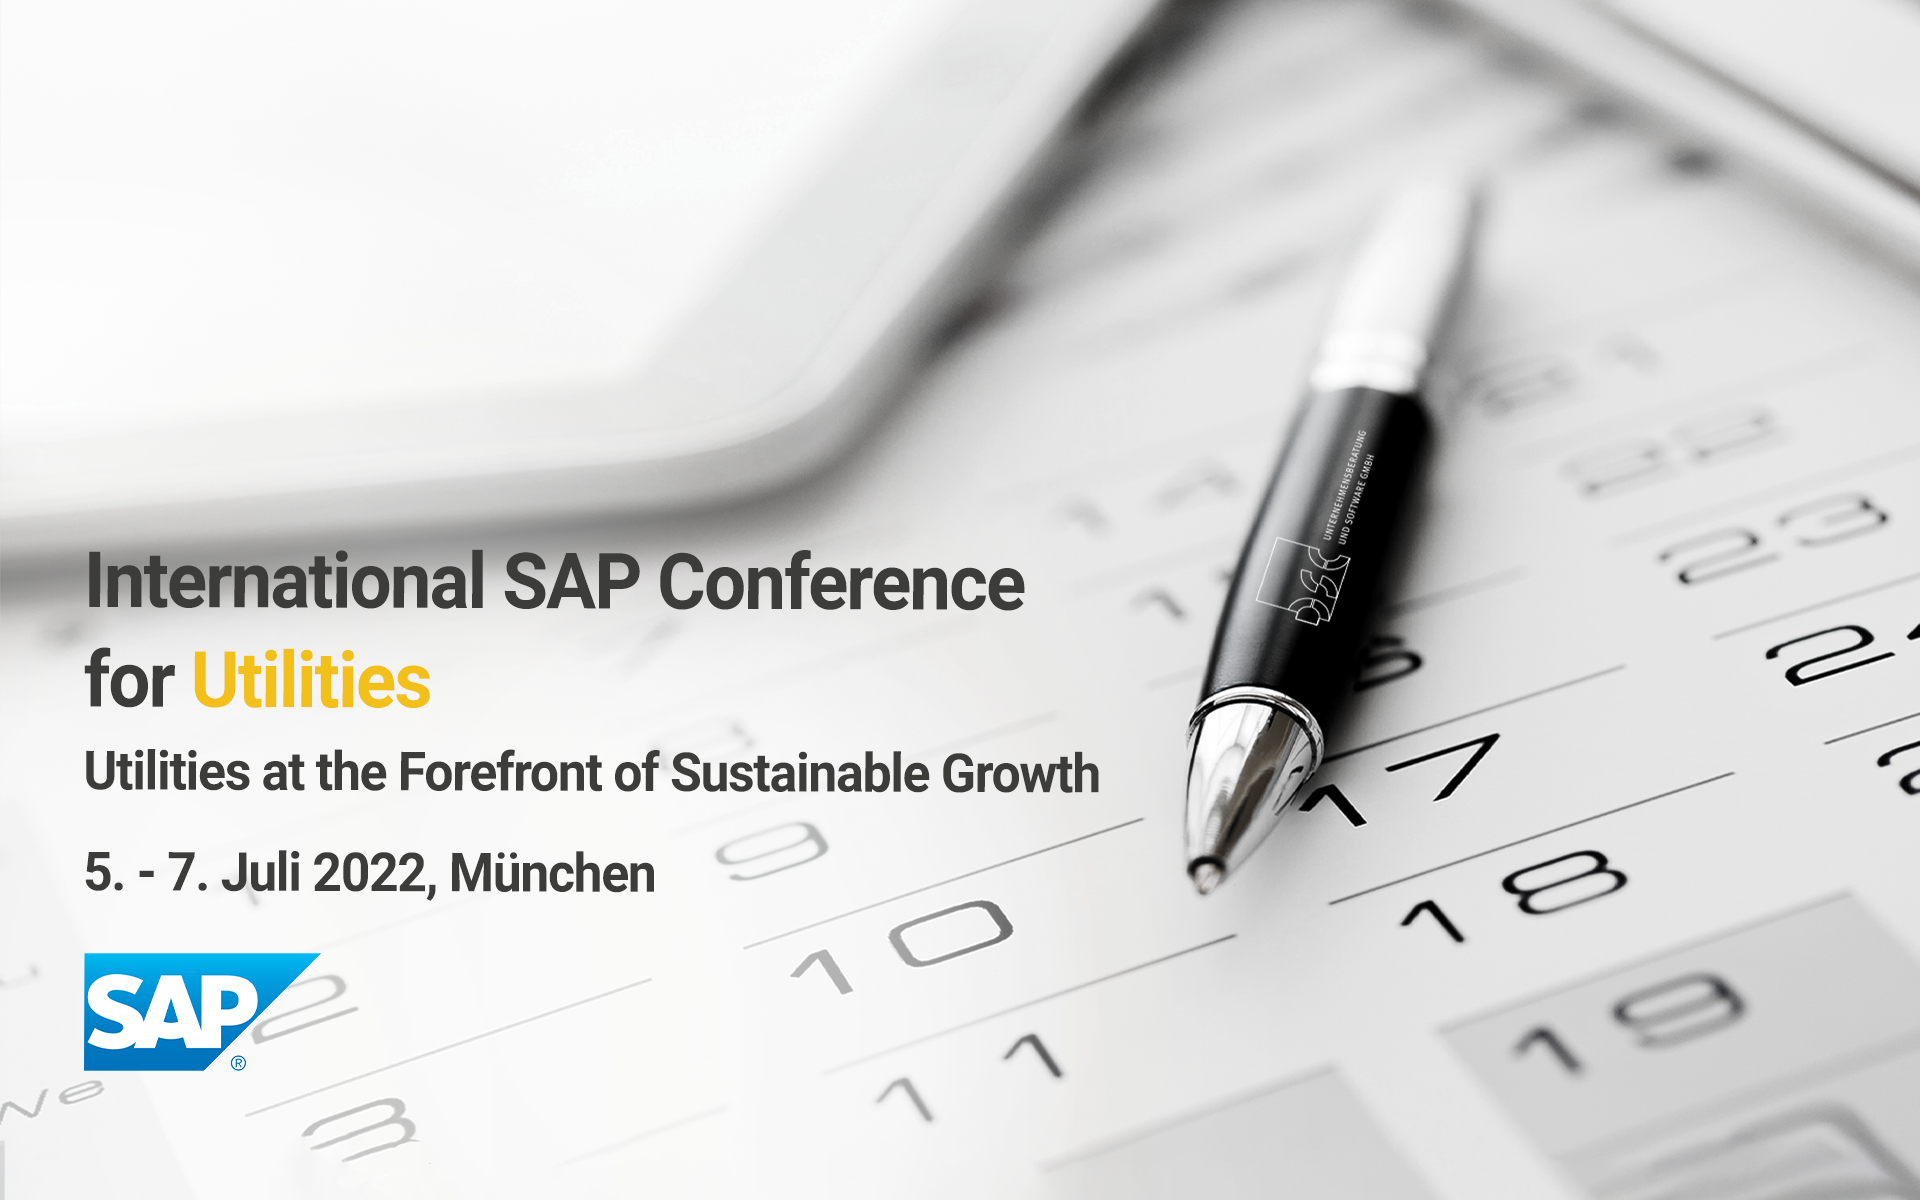 SAP IUC 2022 - International SAP Conference for Utilities